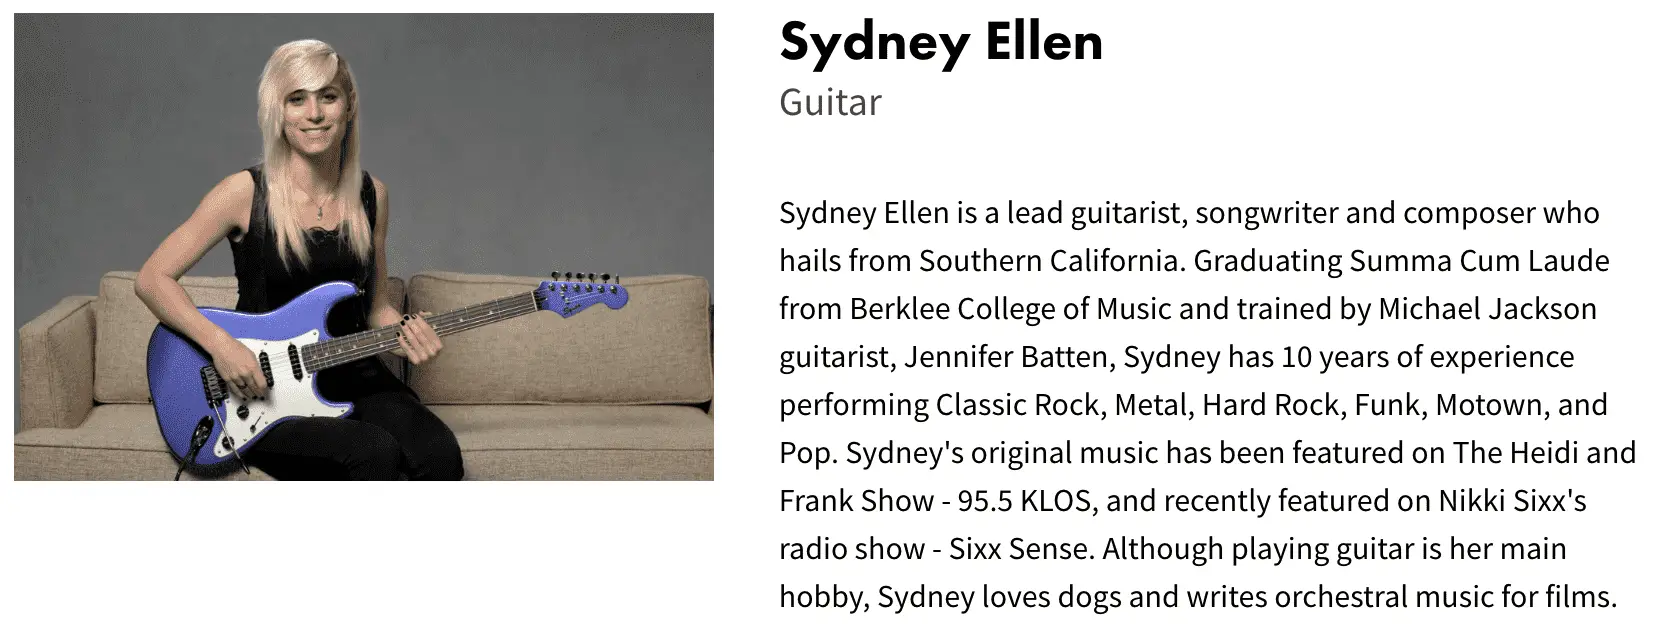 Fender Play - Sydney Ellen